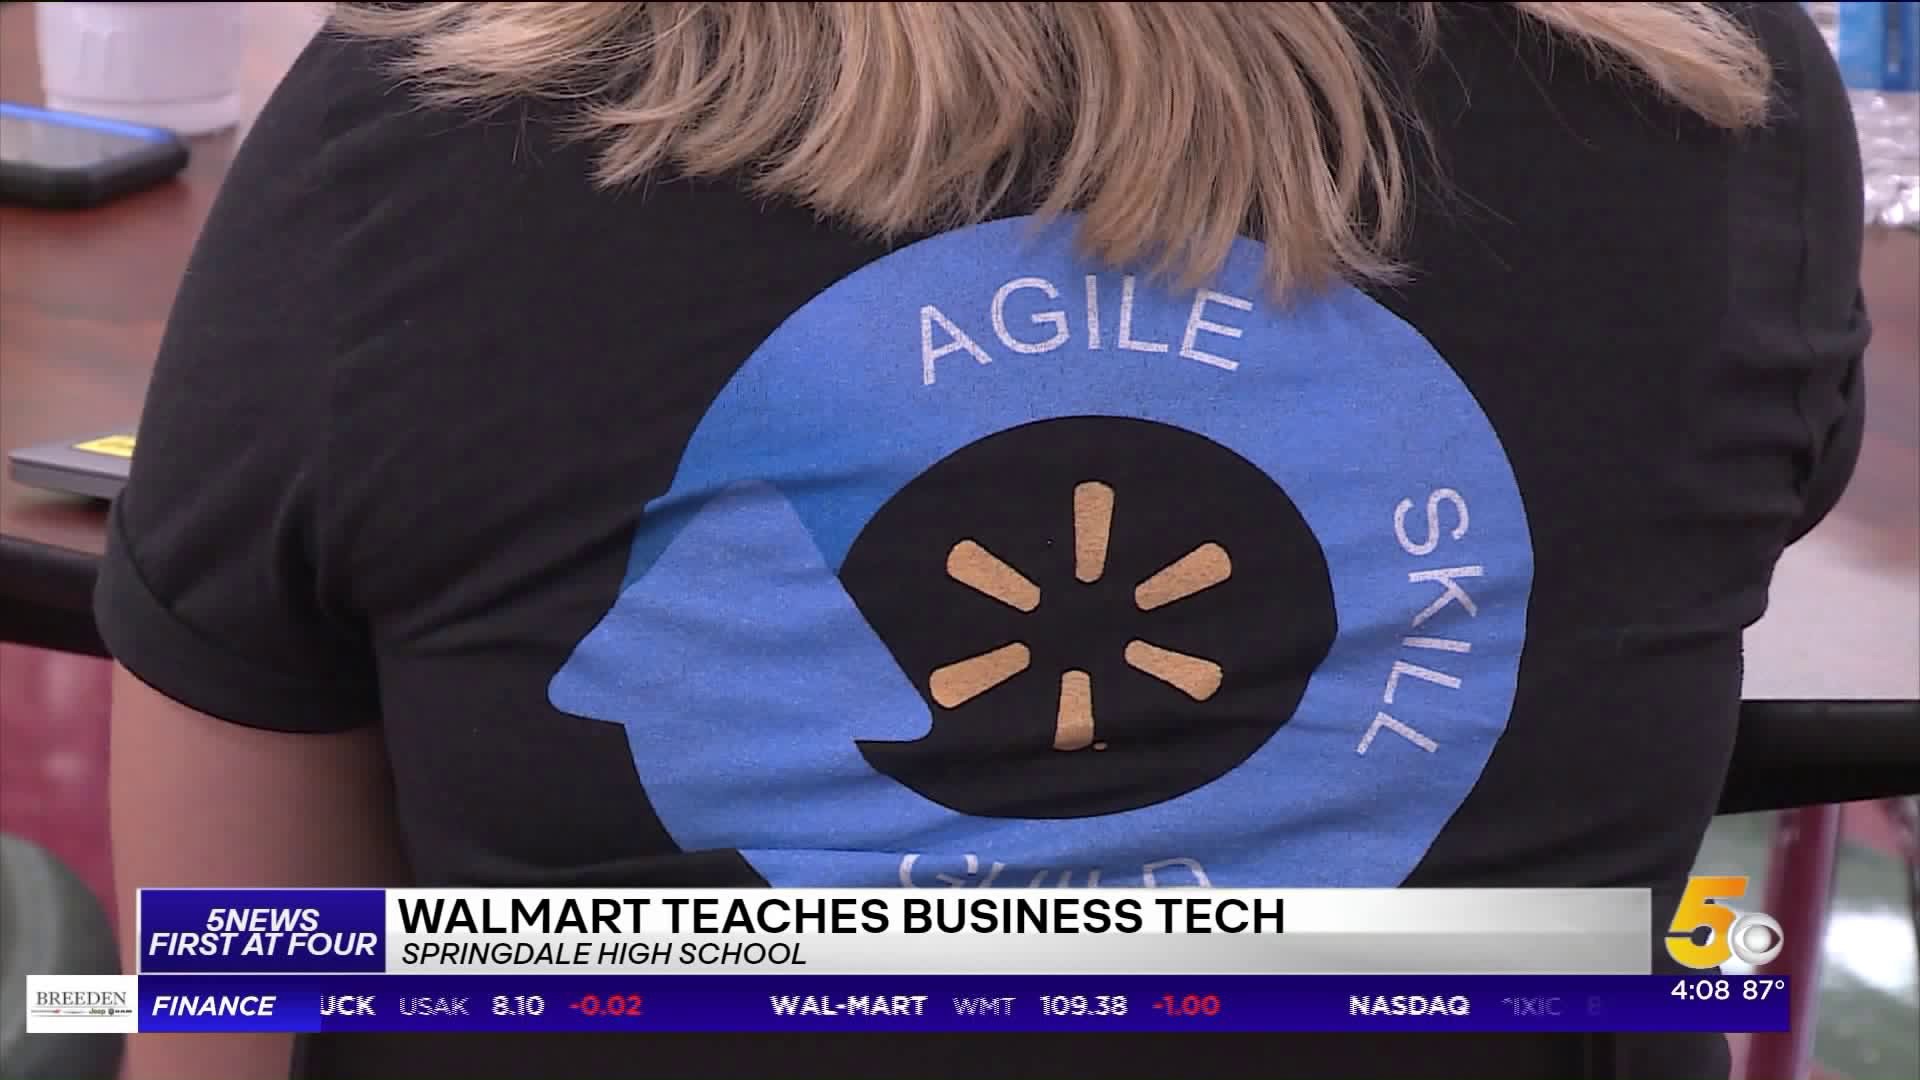 Walmart Teaches Business Technology To Springdale Teachers